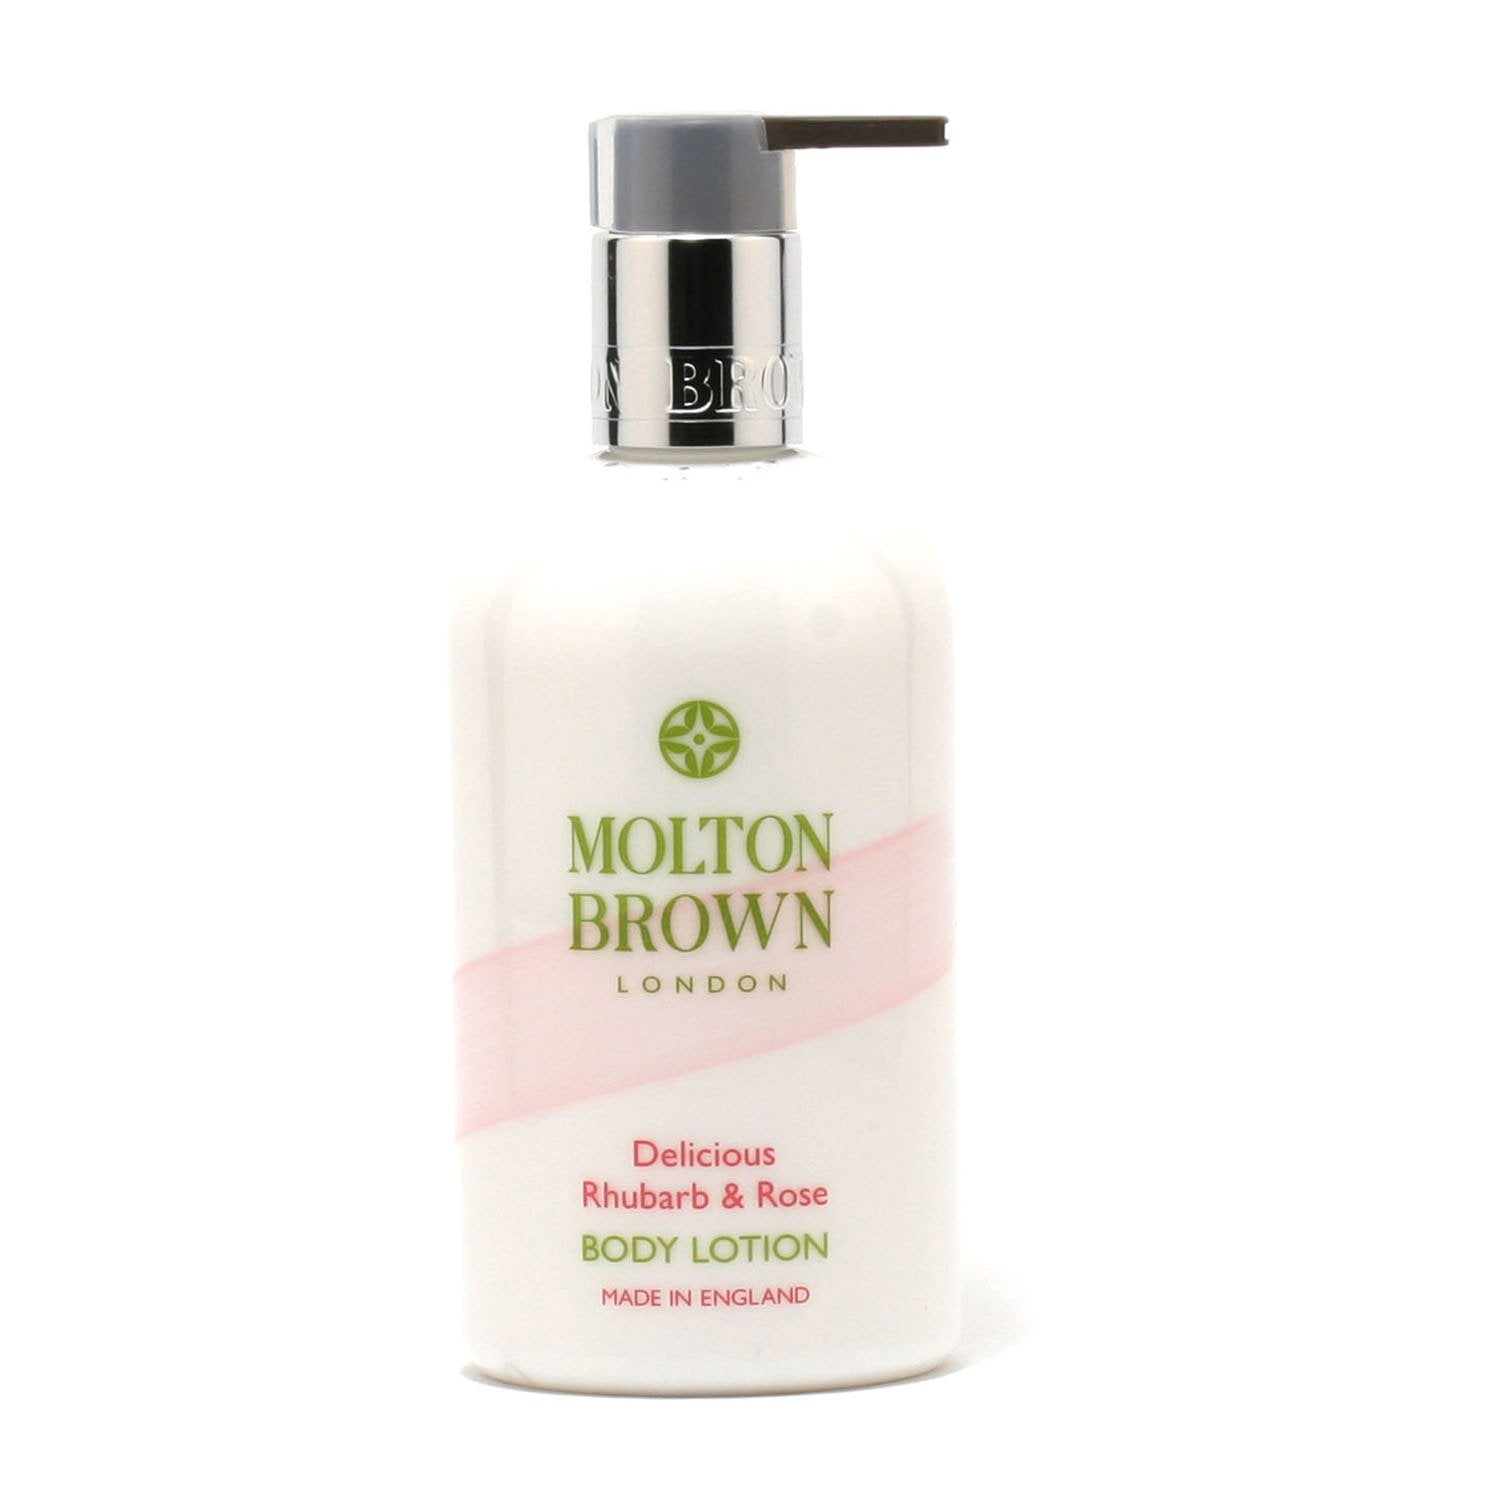 Bath And Body - MOLTON BROWN DELICIOUS RHUBARB & ROSE BODY LOTION, 10.0 OZ